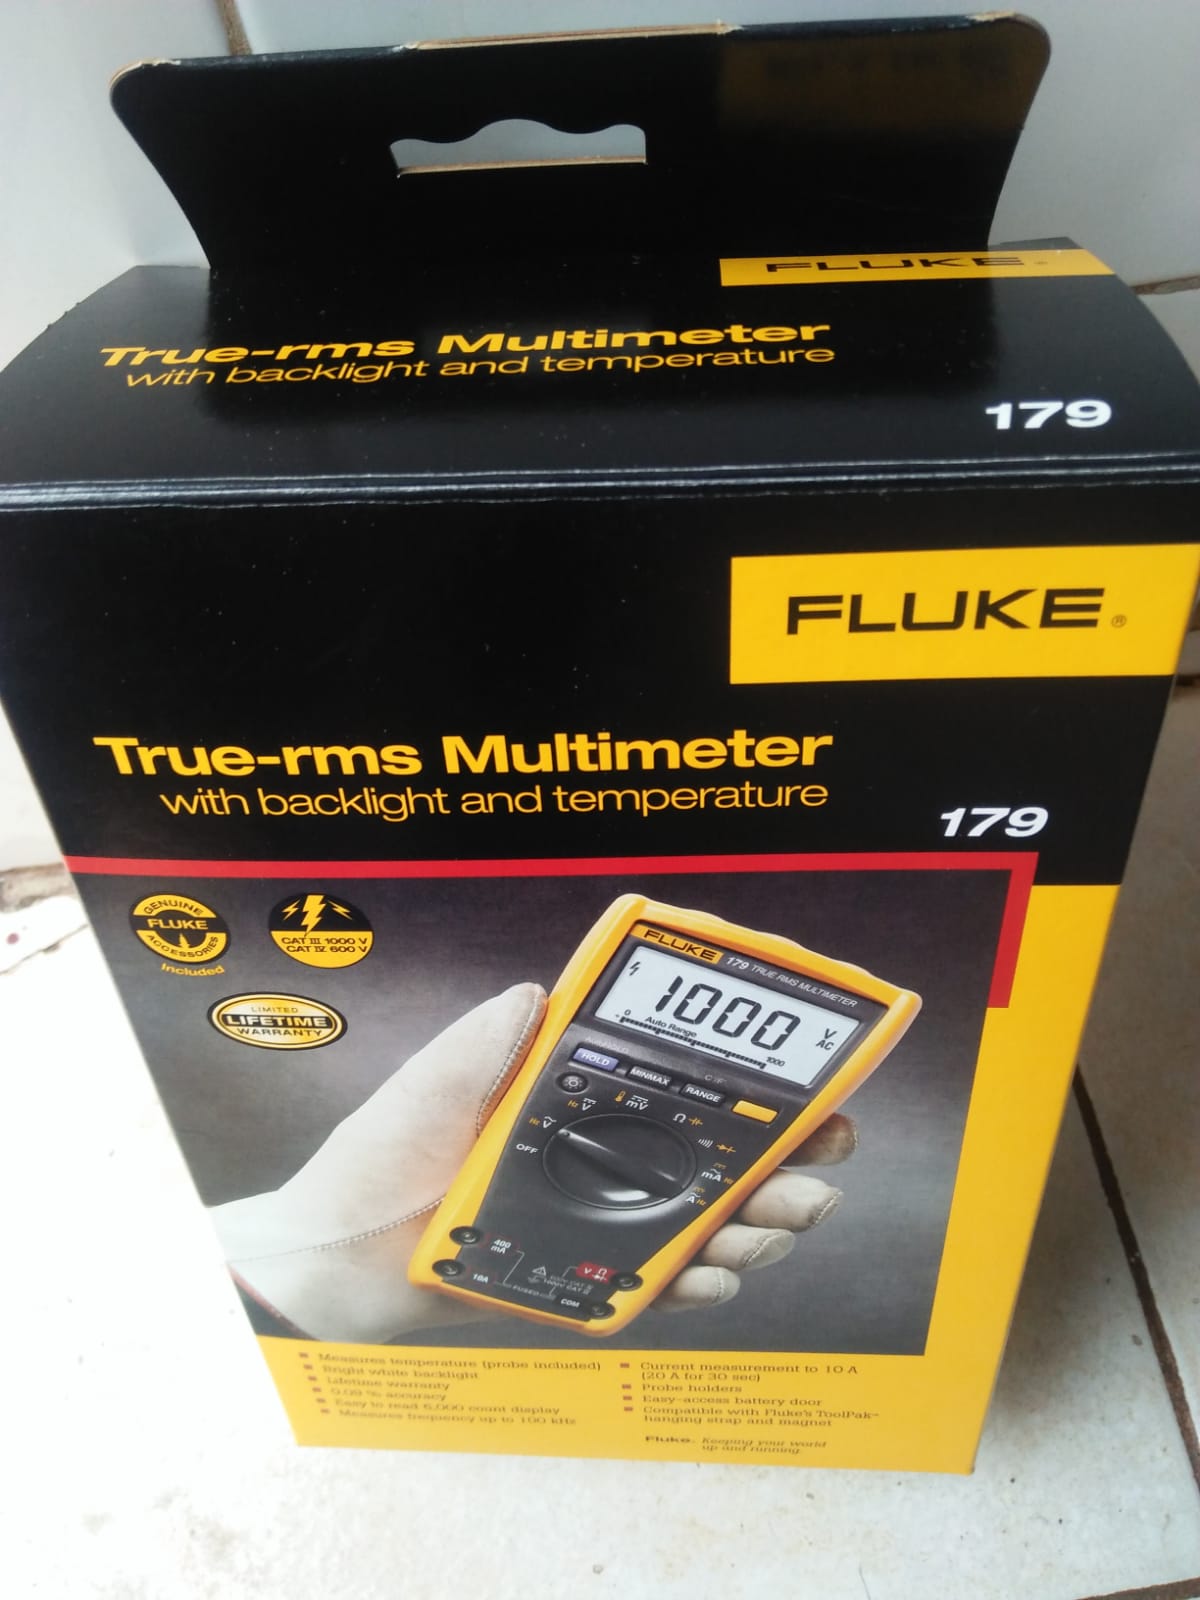 470} Best Digital Auto-Range Multimeter for Electronics Aneng Q1 vs Fluke  179 Comparison 